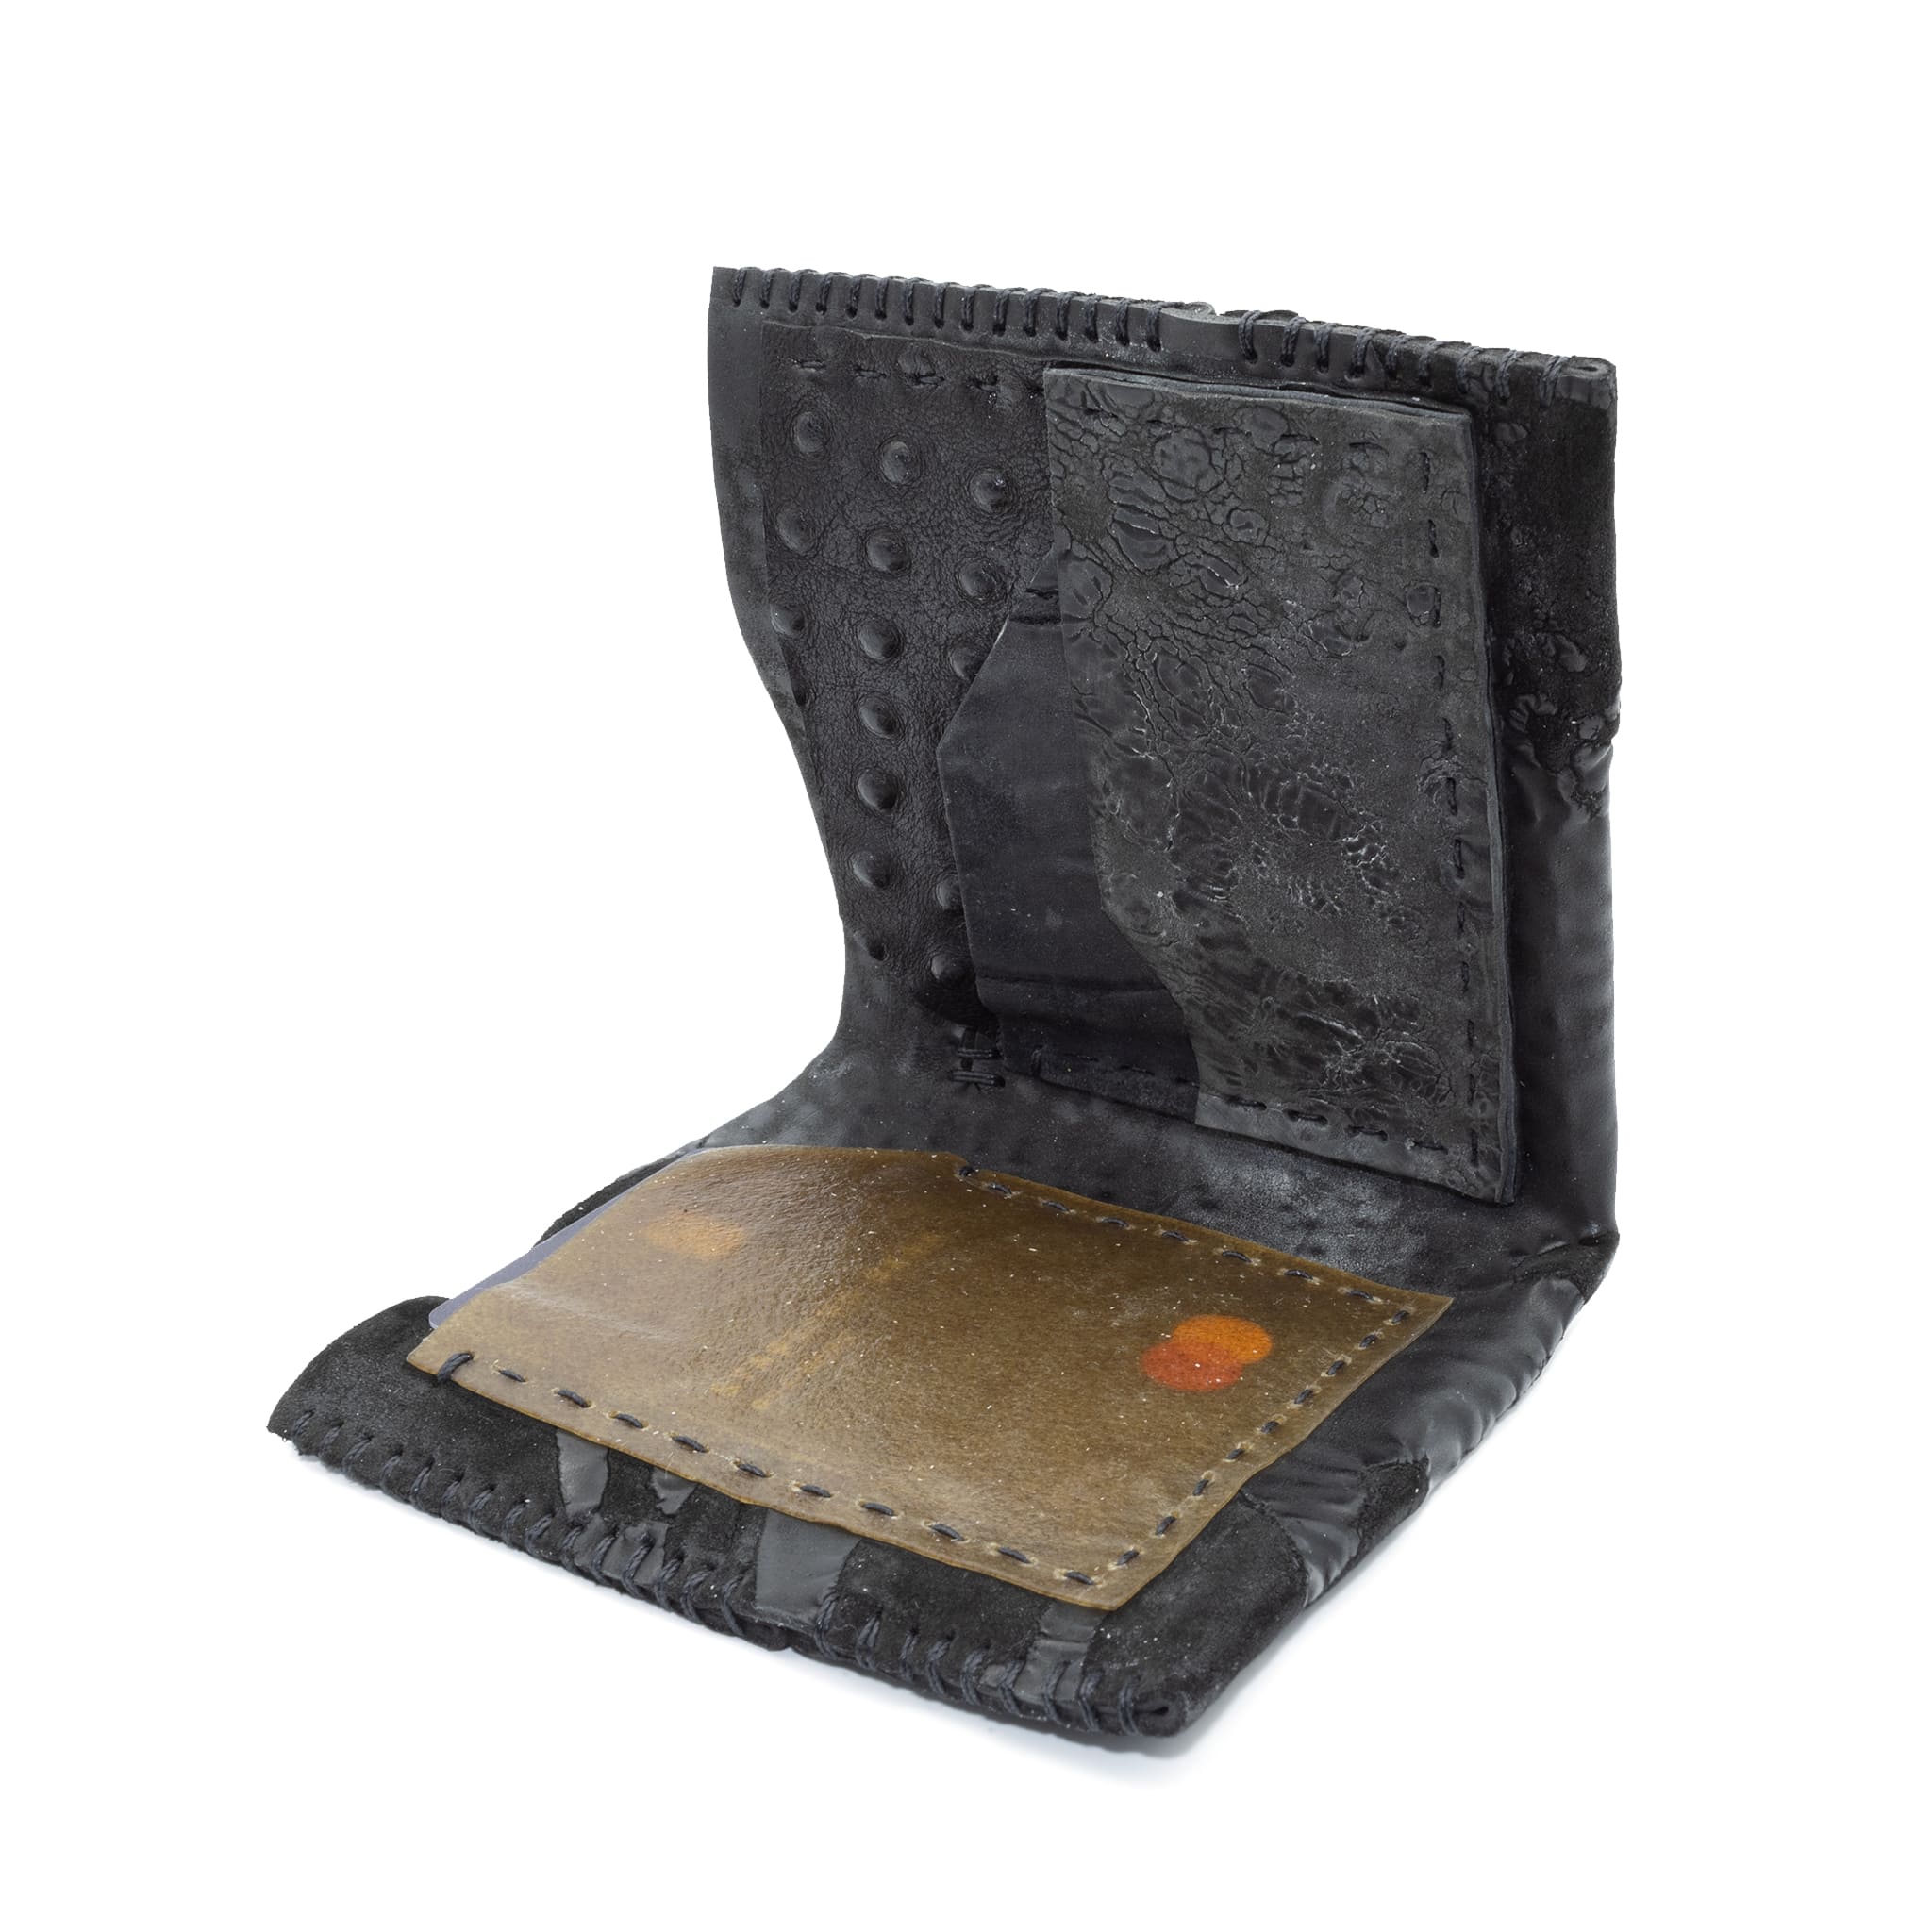 atelier skn black reverse culatta leather closed seam bifold wallet